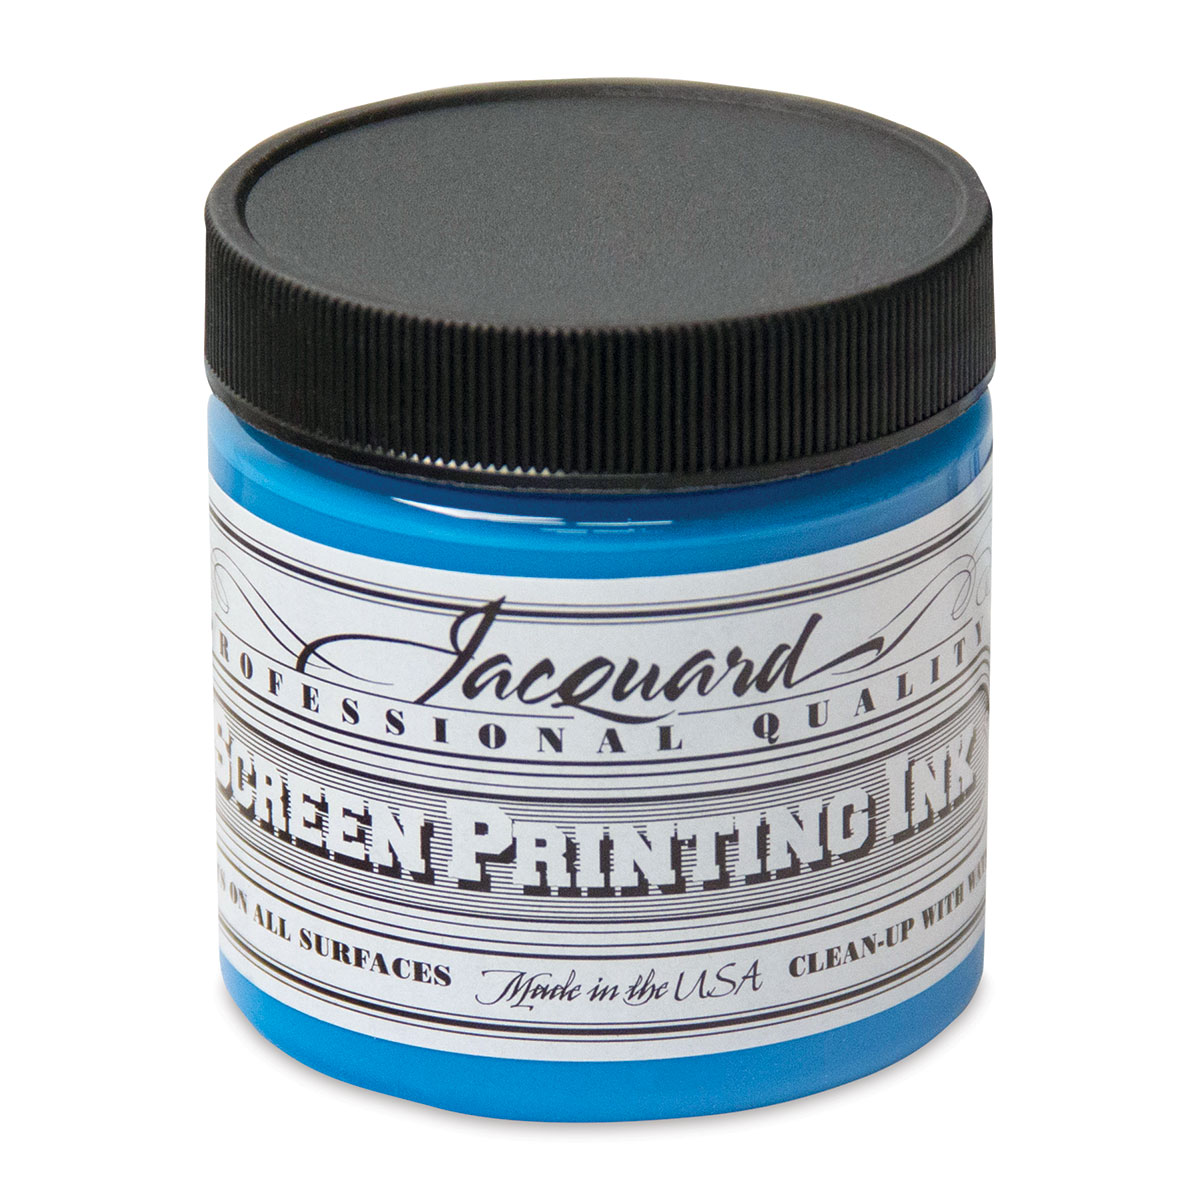 Jacquard - Versatex Screen Printing Ink - 16 oz. - Royal Blue, 1